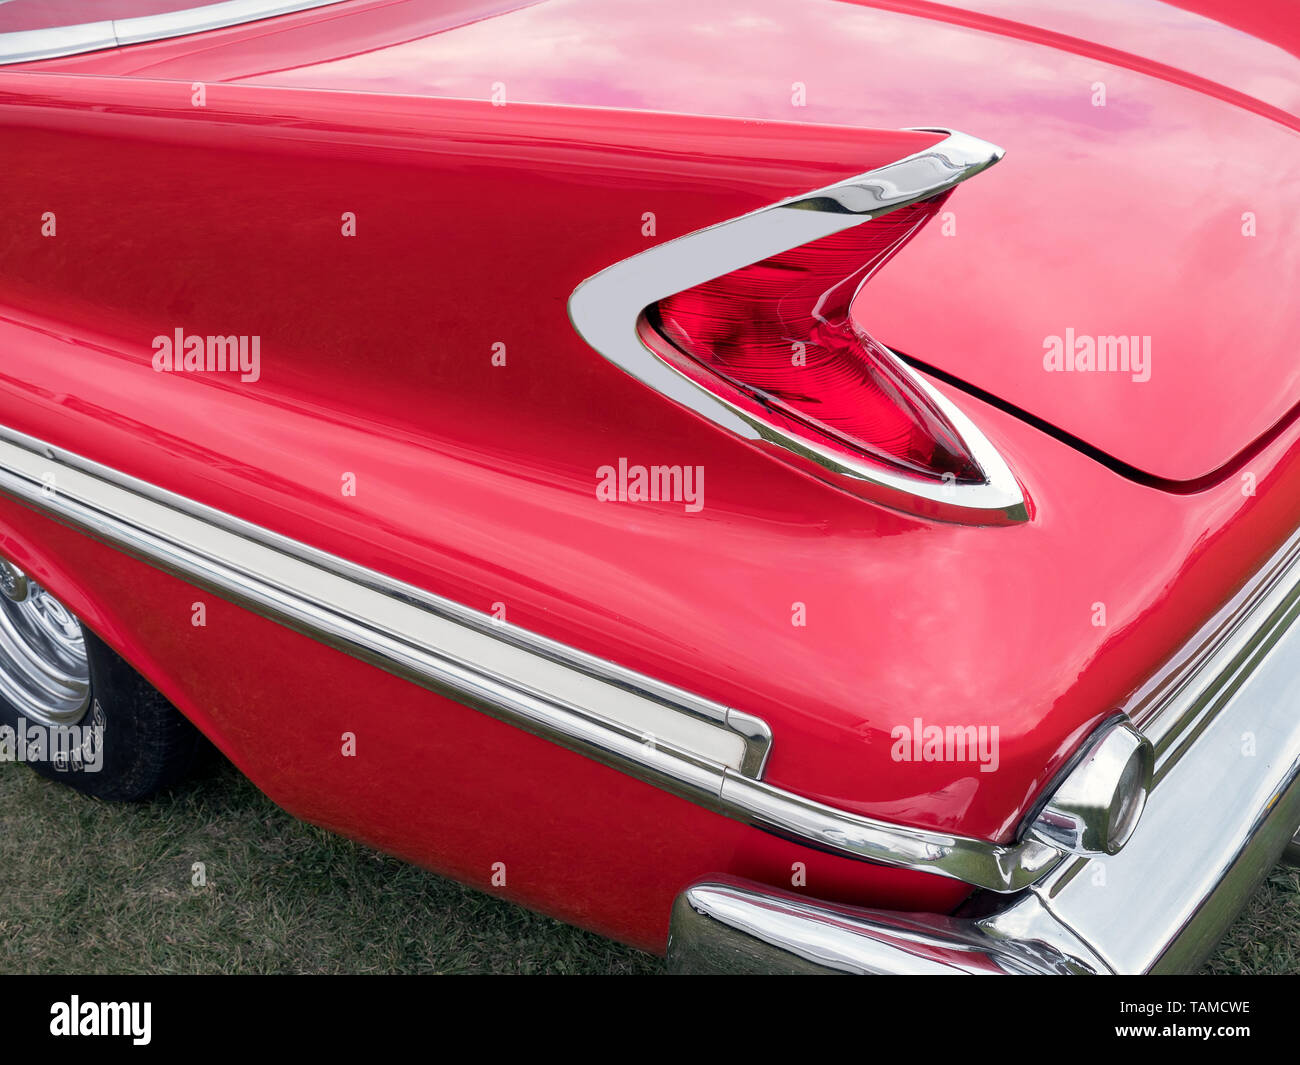 1960 Chrysler tail fin Stock Photo